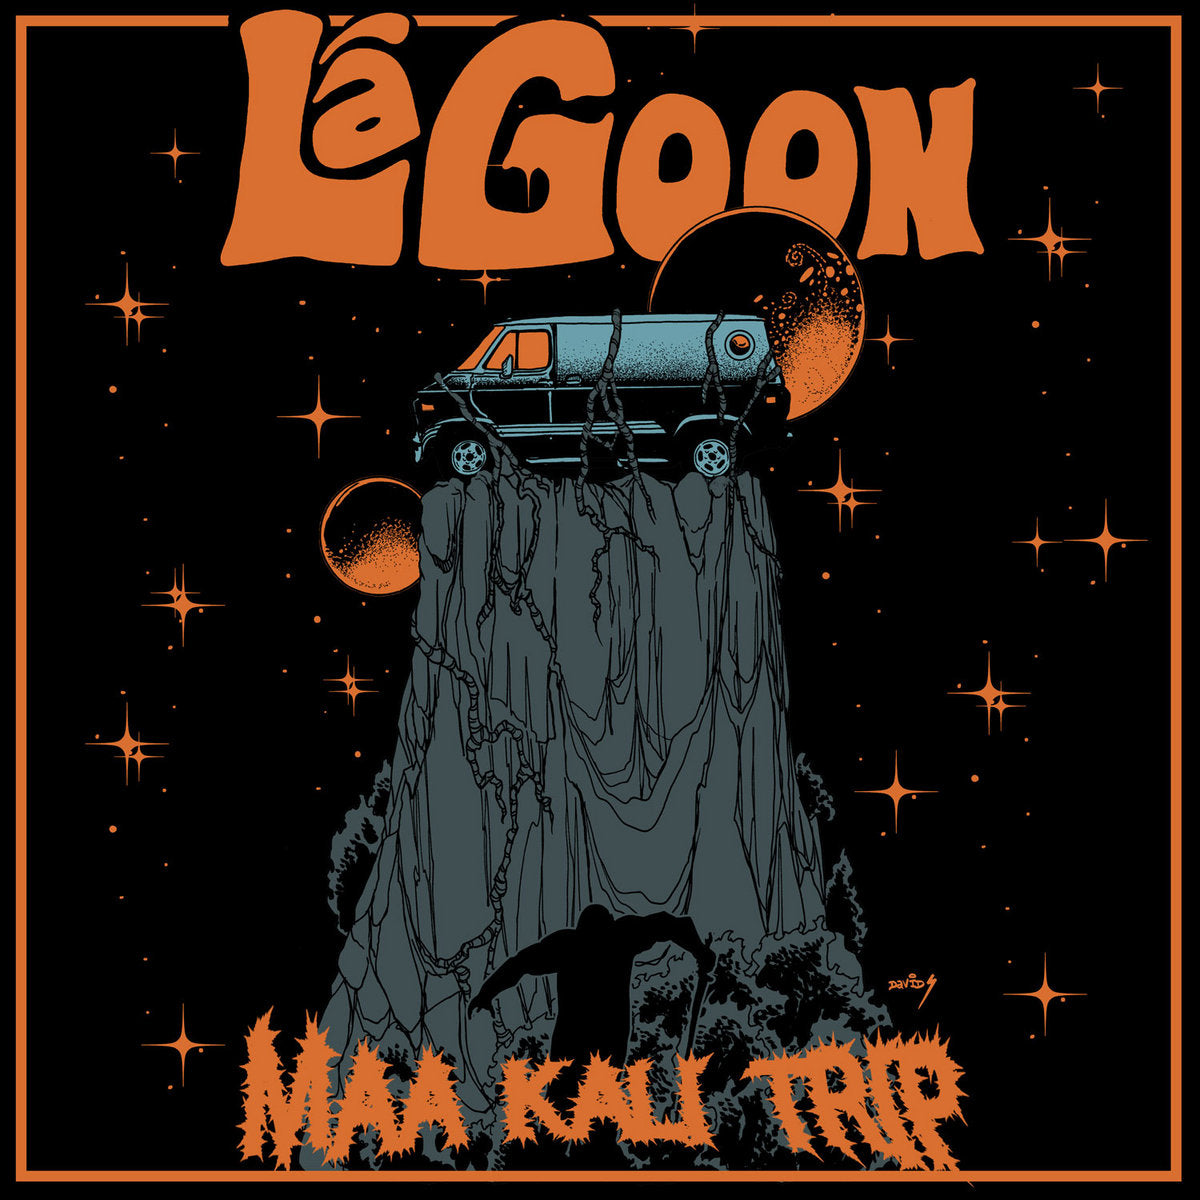 LáGoon - "Maa Kali Trip" Compact Disc